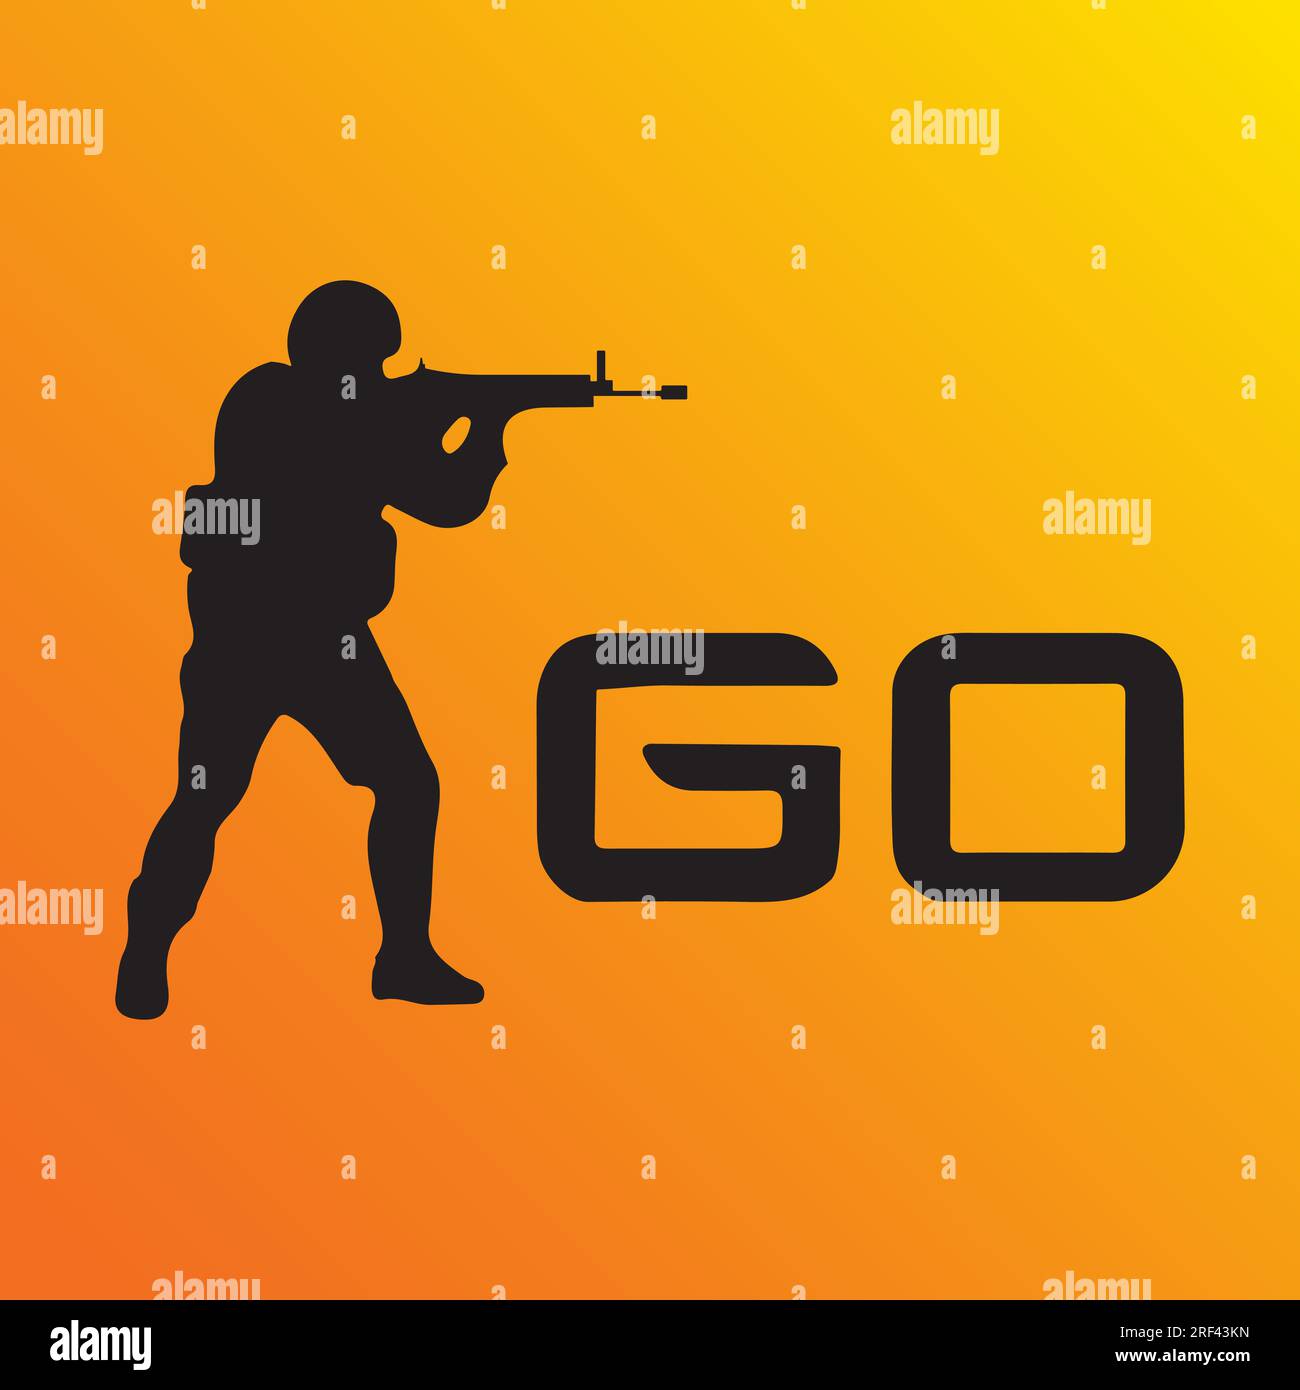 Counter-Strike 2 Introduces New Animations, Valve Mass Bans CS:GO